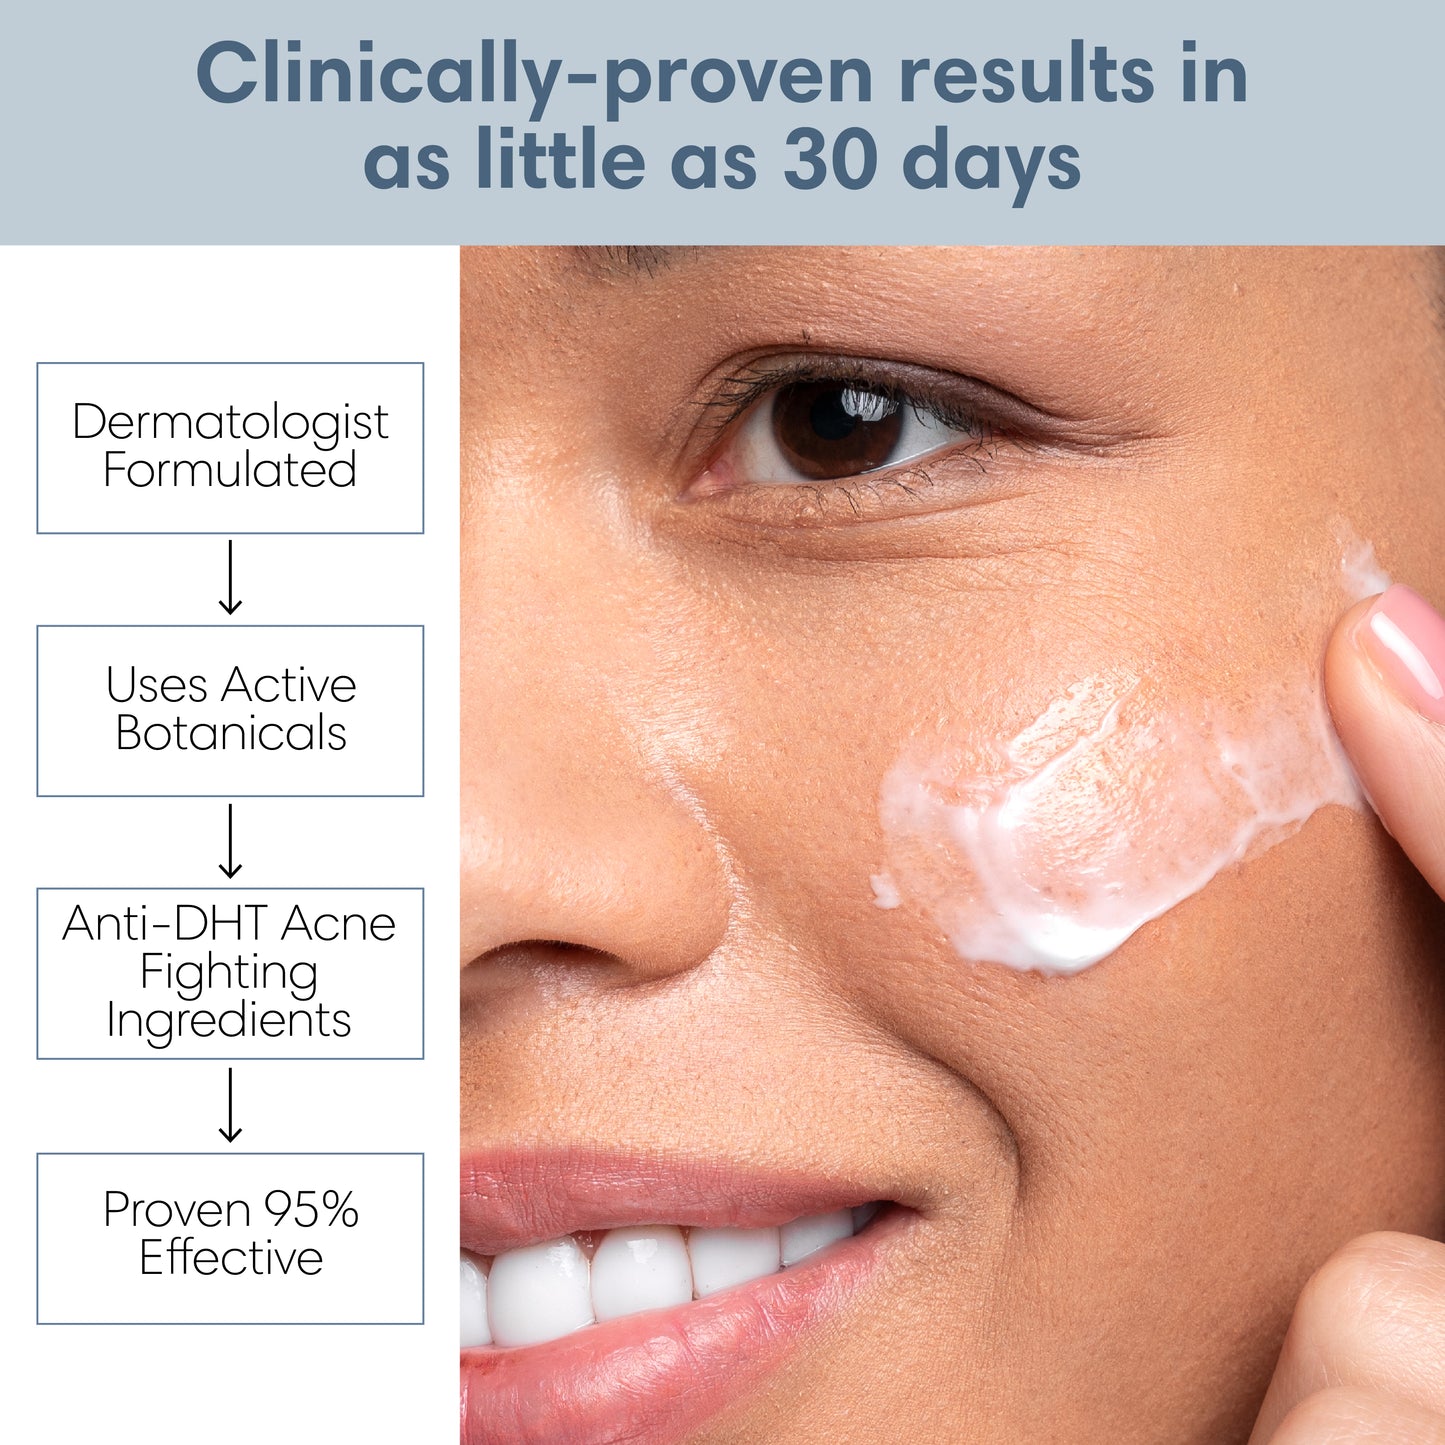 60 Day Acne Treatment Kit - Benzoyl Peroxide